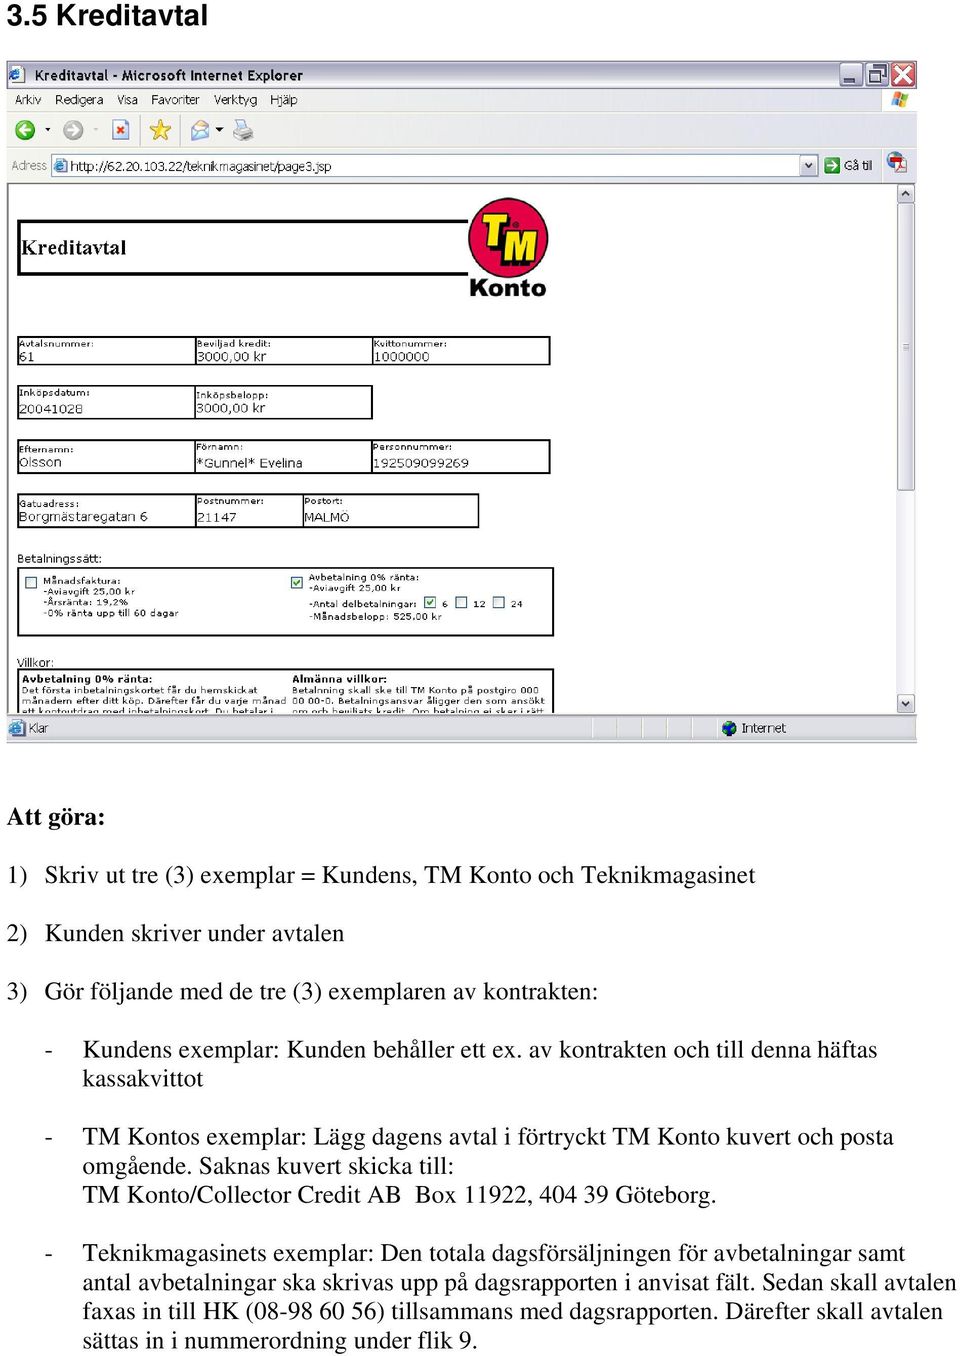 Saknas kuvert skicka till: TM Konto/Collector Credit AB Box 11922, 404 39 Göteborg.